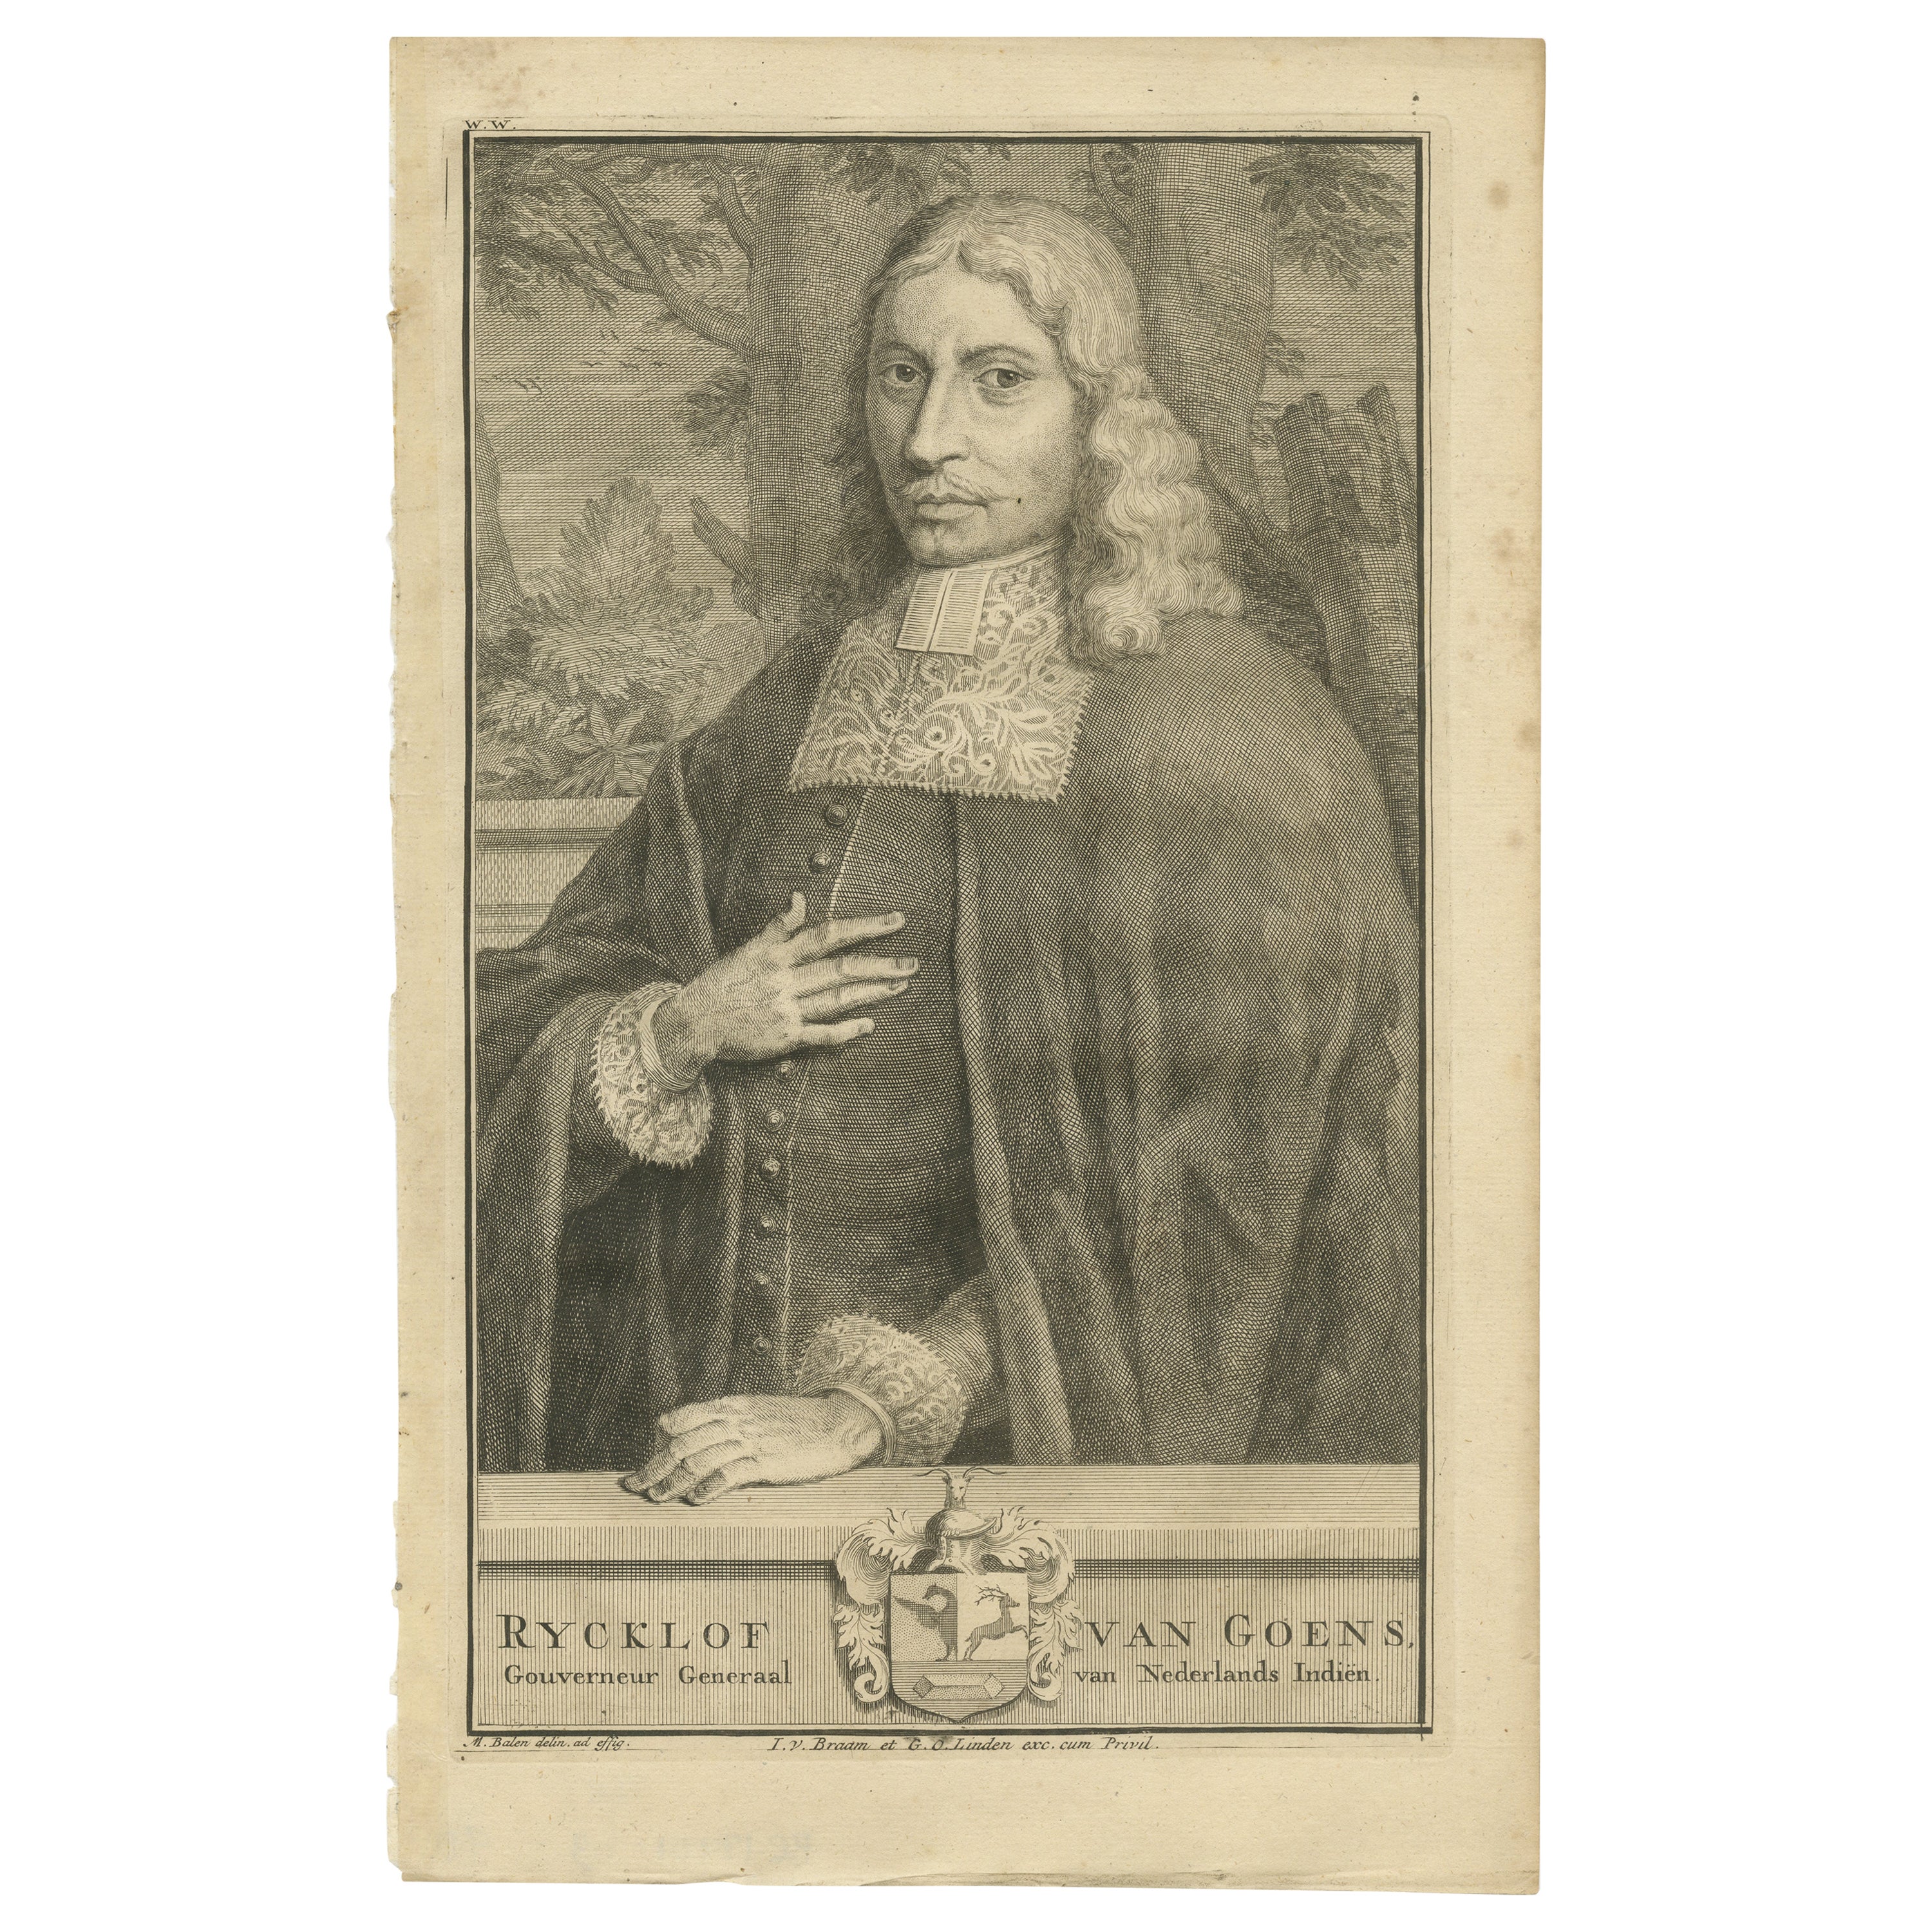 Rycklof van Goens: Formidable Governor-General of the VOC, Niederländisch-Ostindien